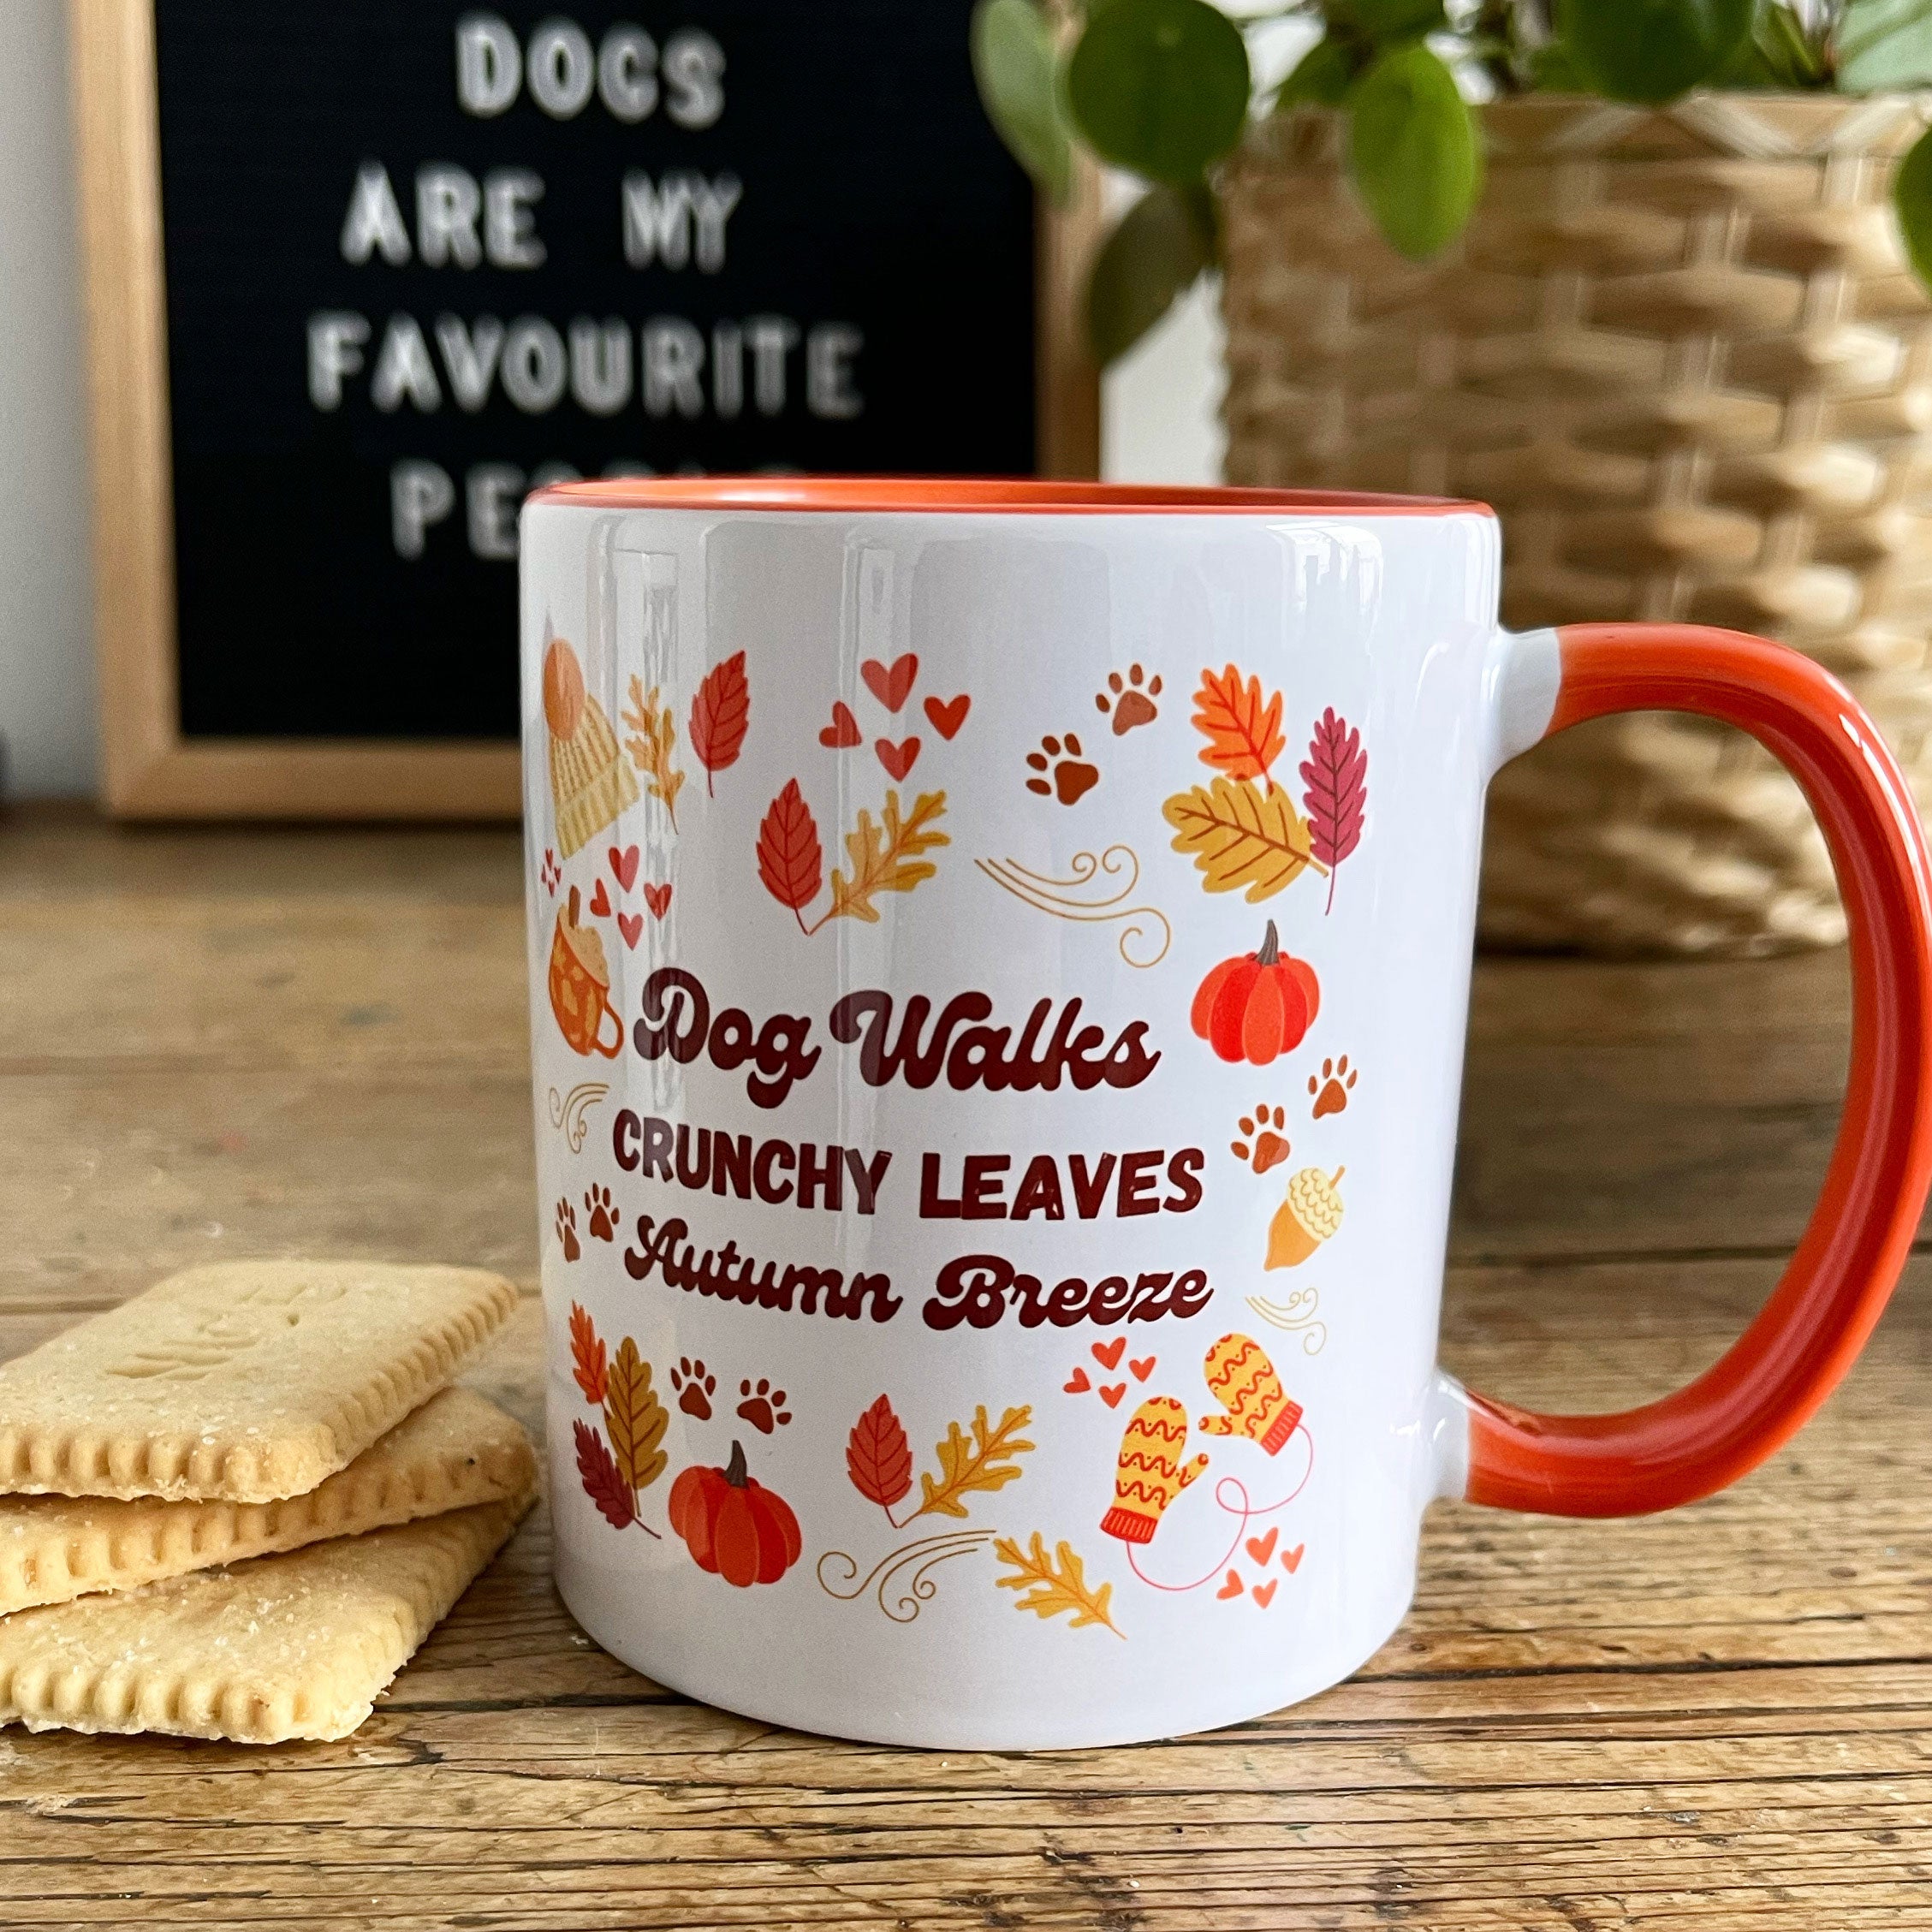 Dog walks crunchy leaves cosy season mug